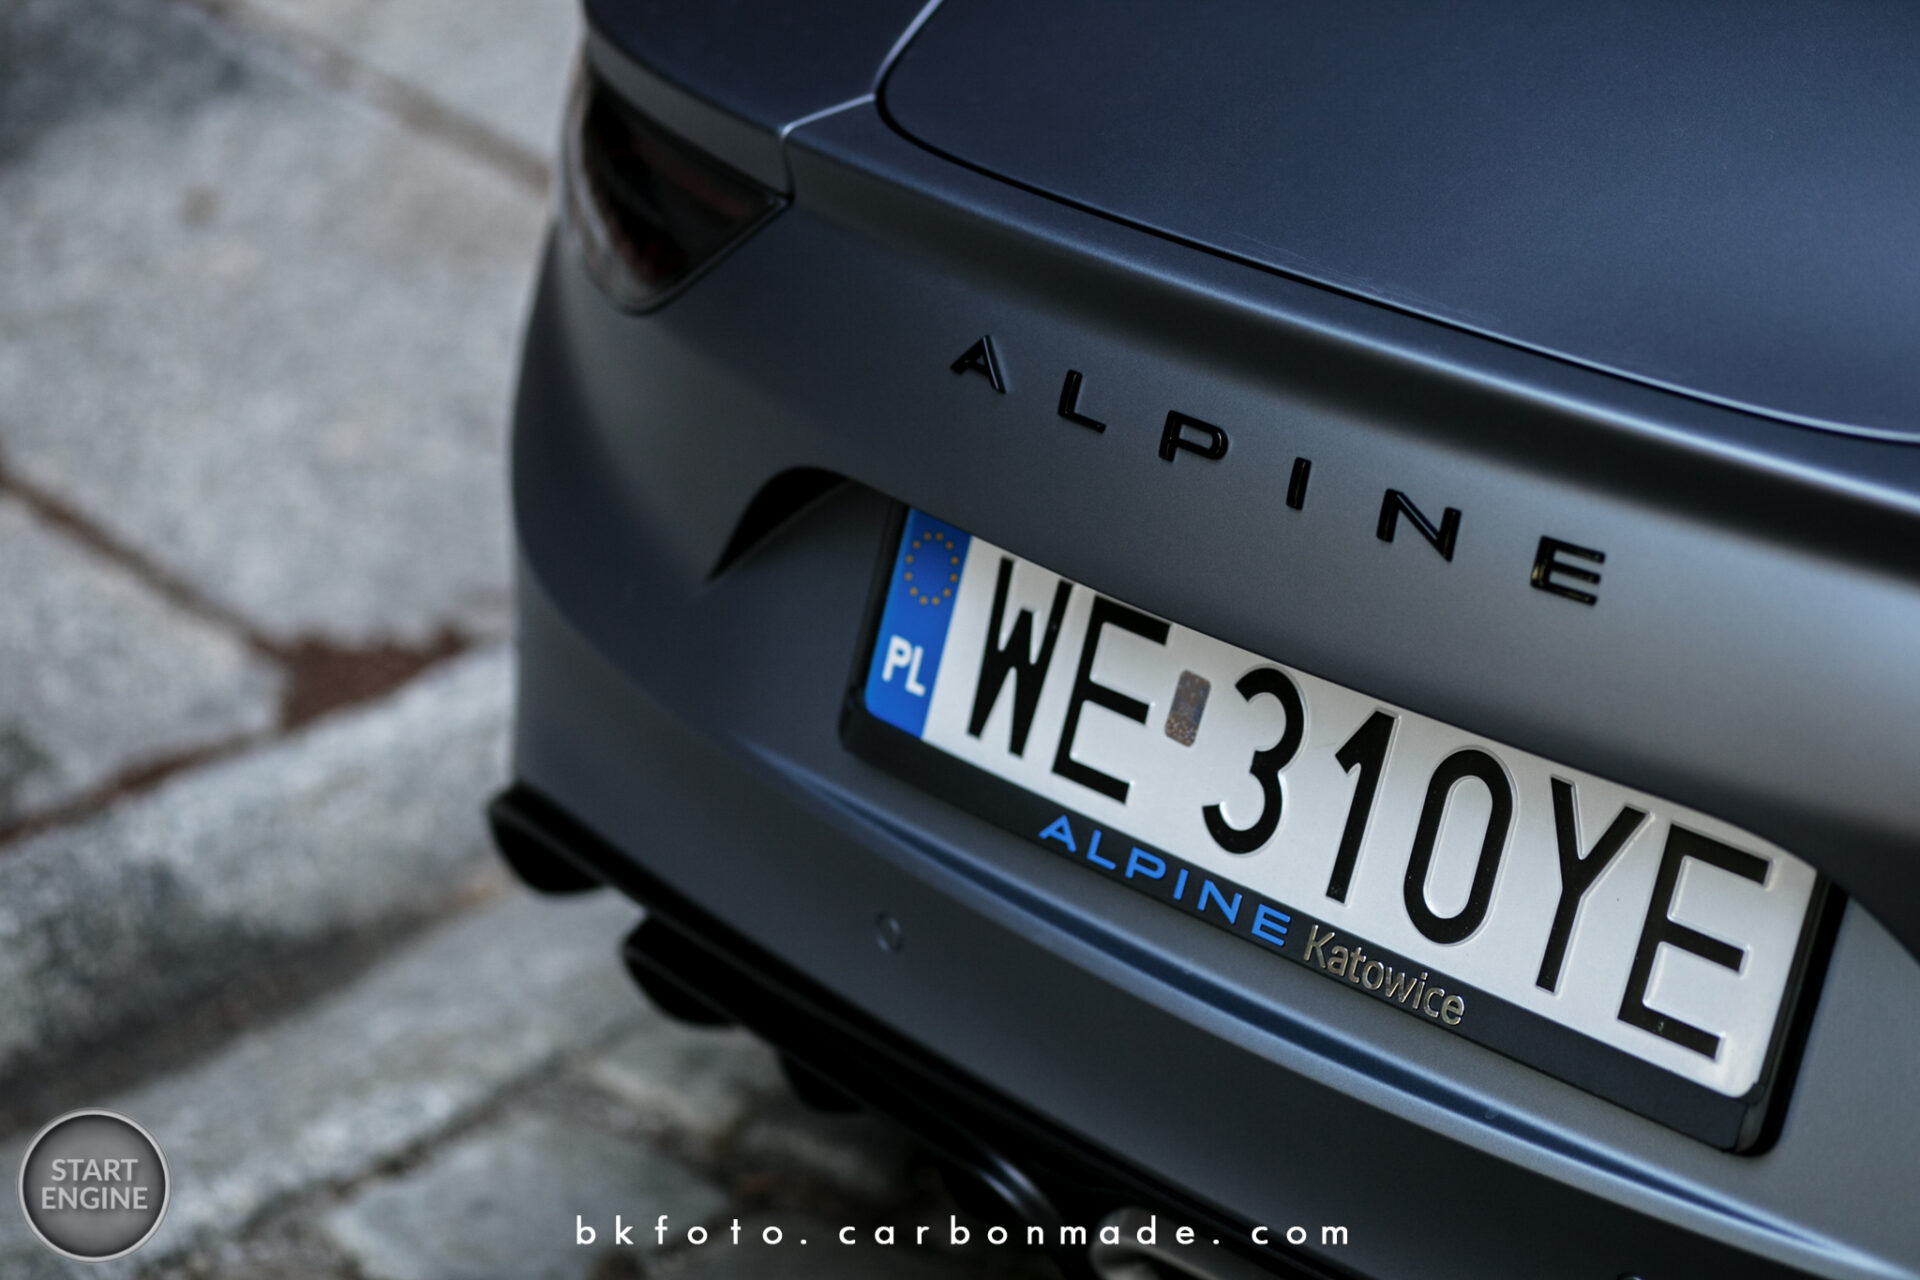 Alpine A110 S